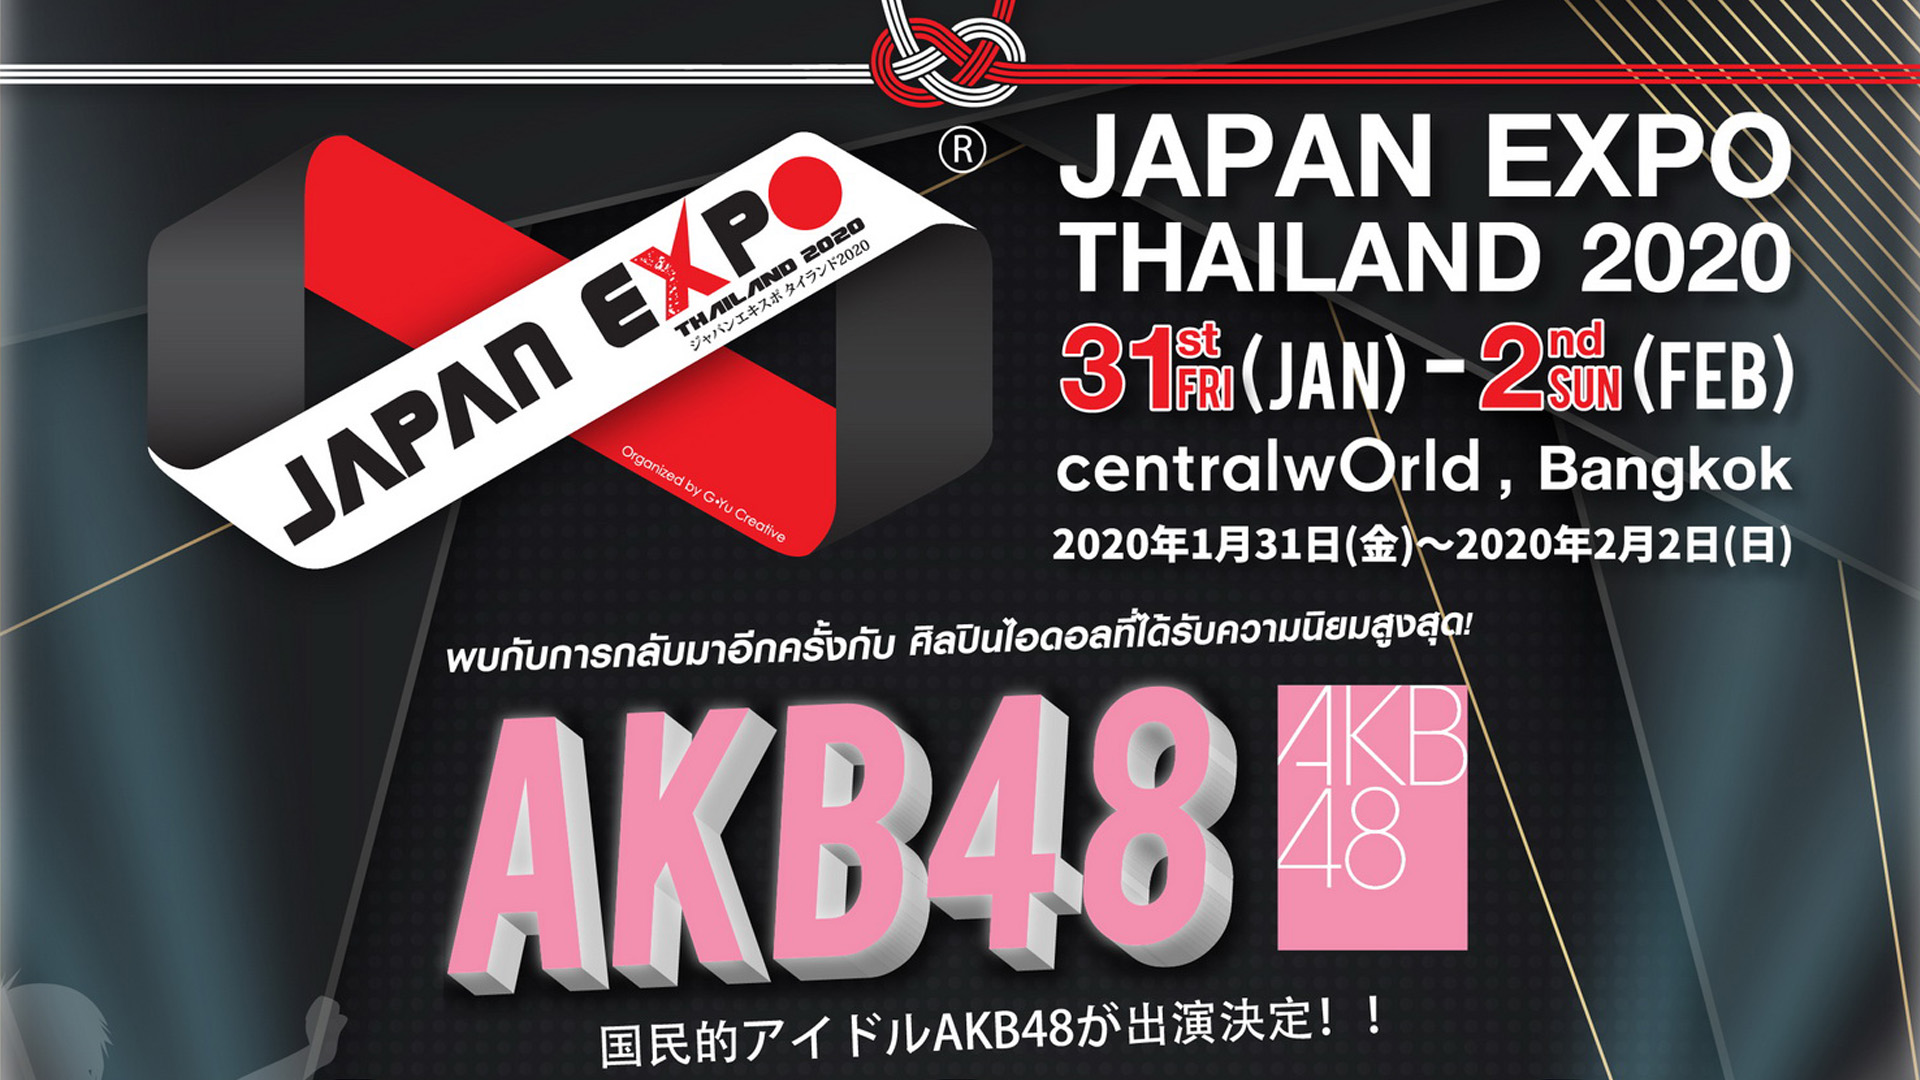 AKB48 พร้อมโชว์ JAPAN EXPO THAILAND 2020 ครั้งที่ 6